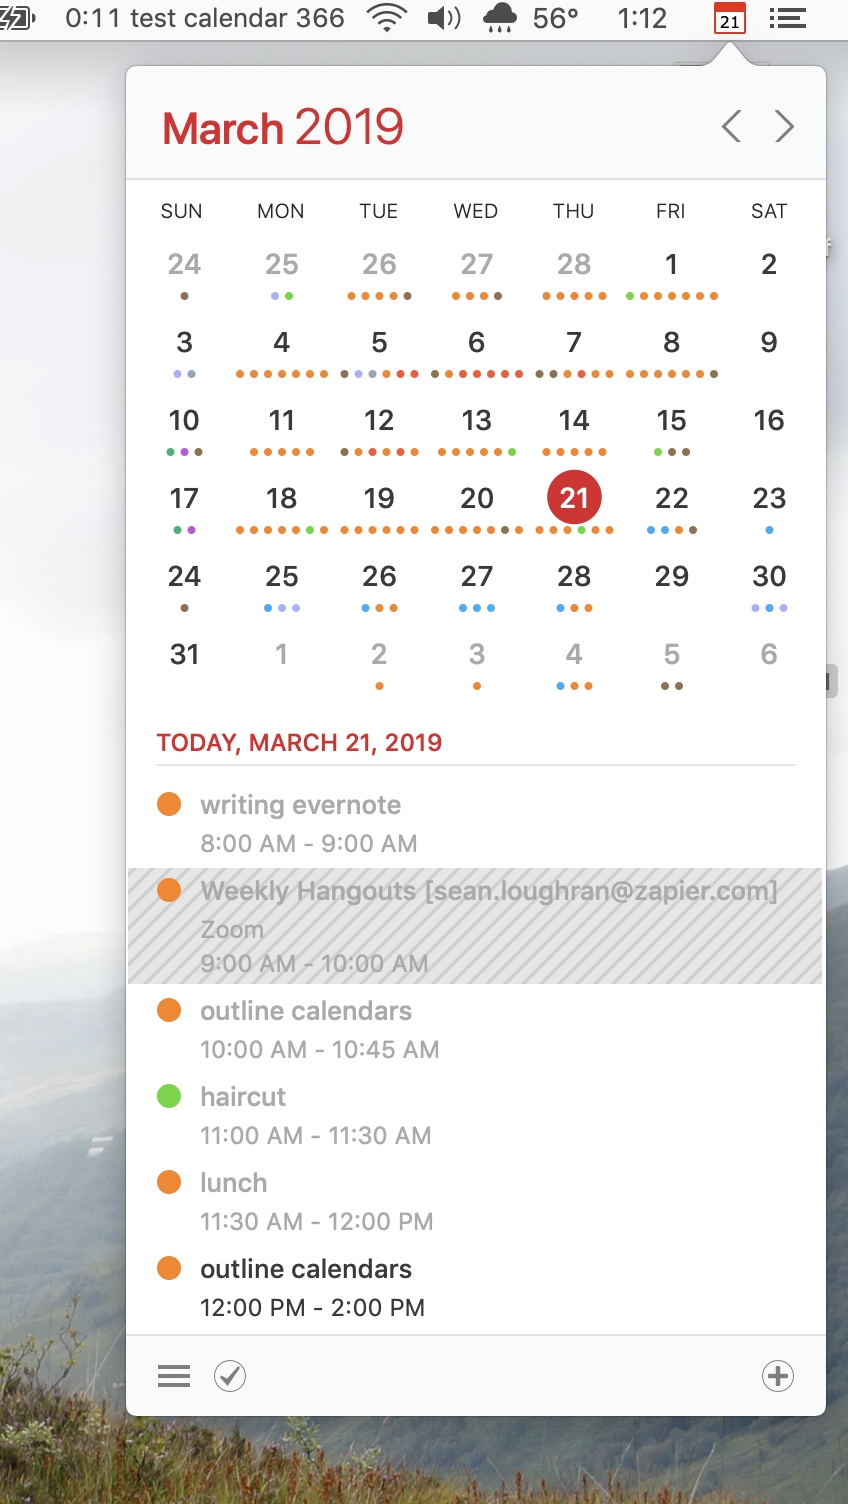 need a calendar software for a mac